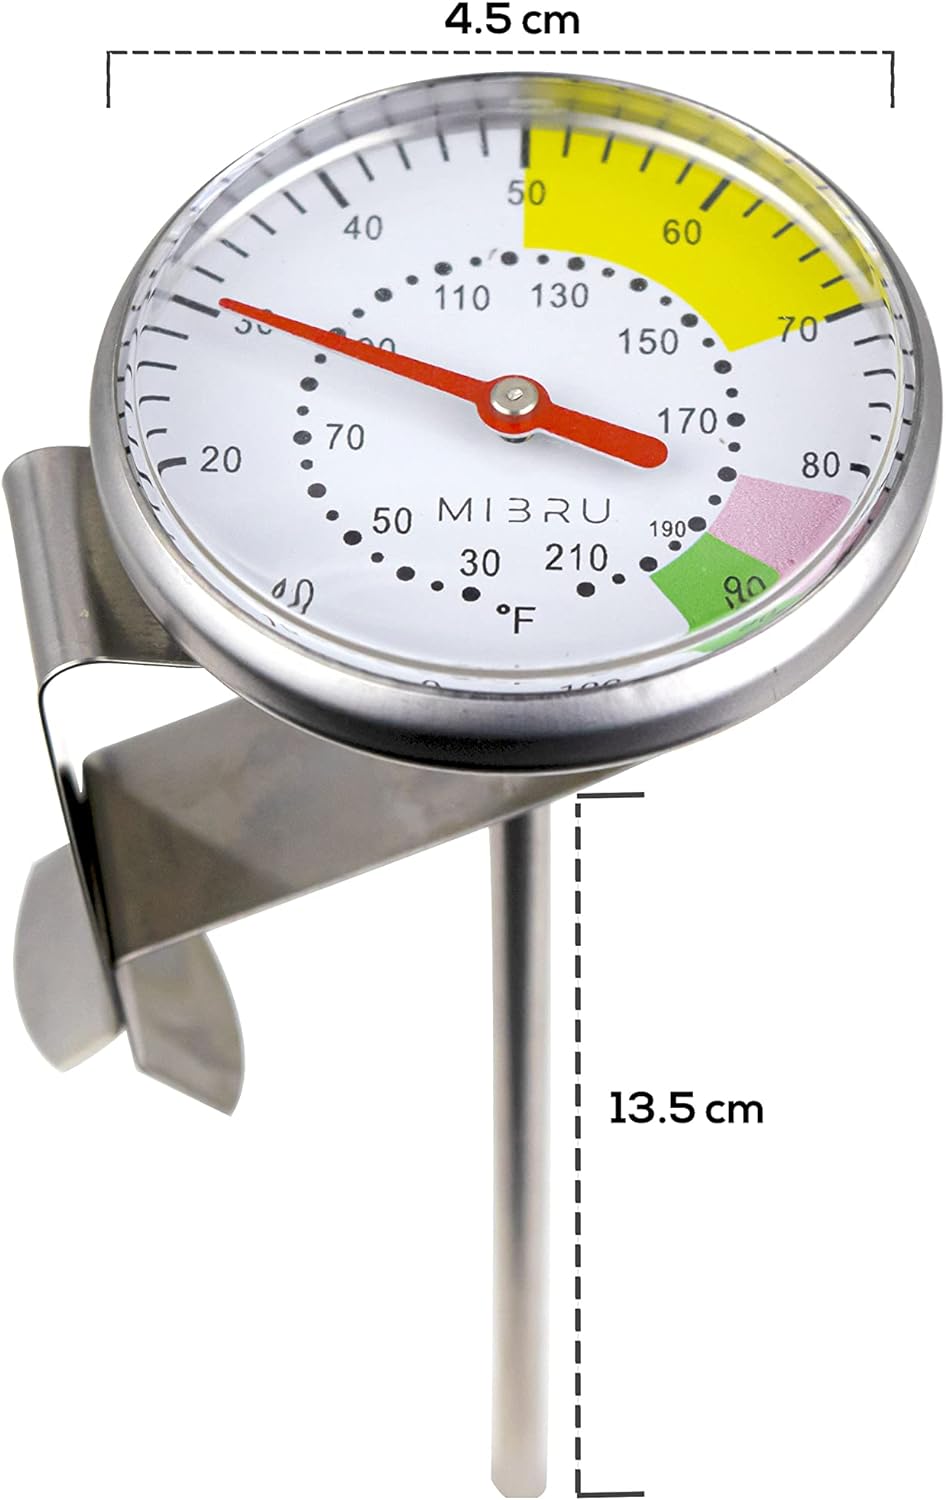 MIBRU A suitable thermometer for specialty coffee and milk temperature مقياس حرارة للقهوة المختصة و درجة حرارة الحليب, min 2 yrs